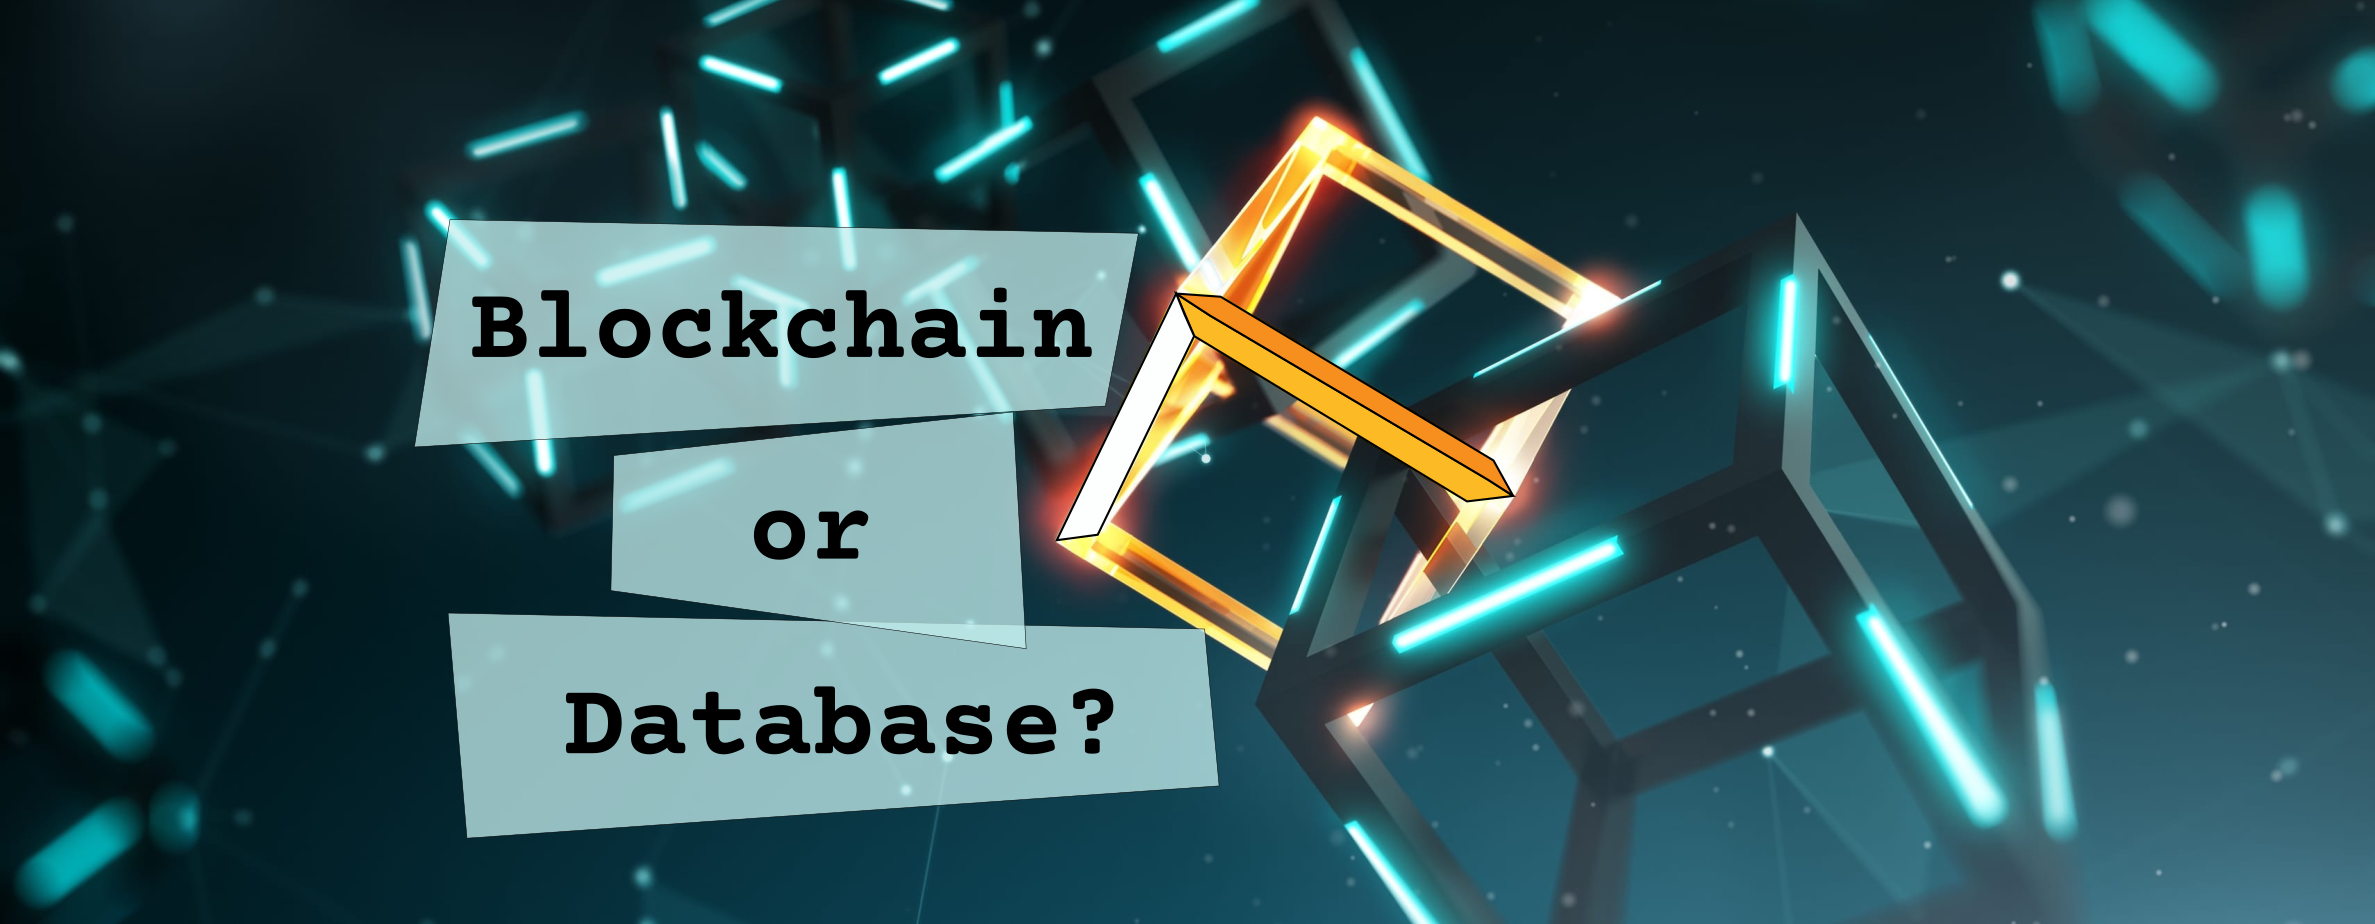 Blockchain or Database?